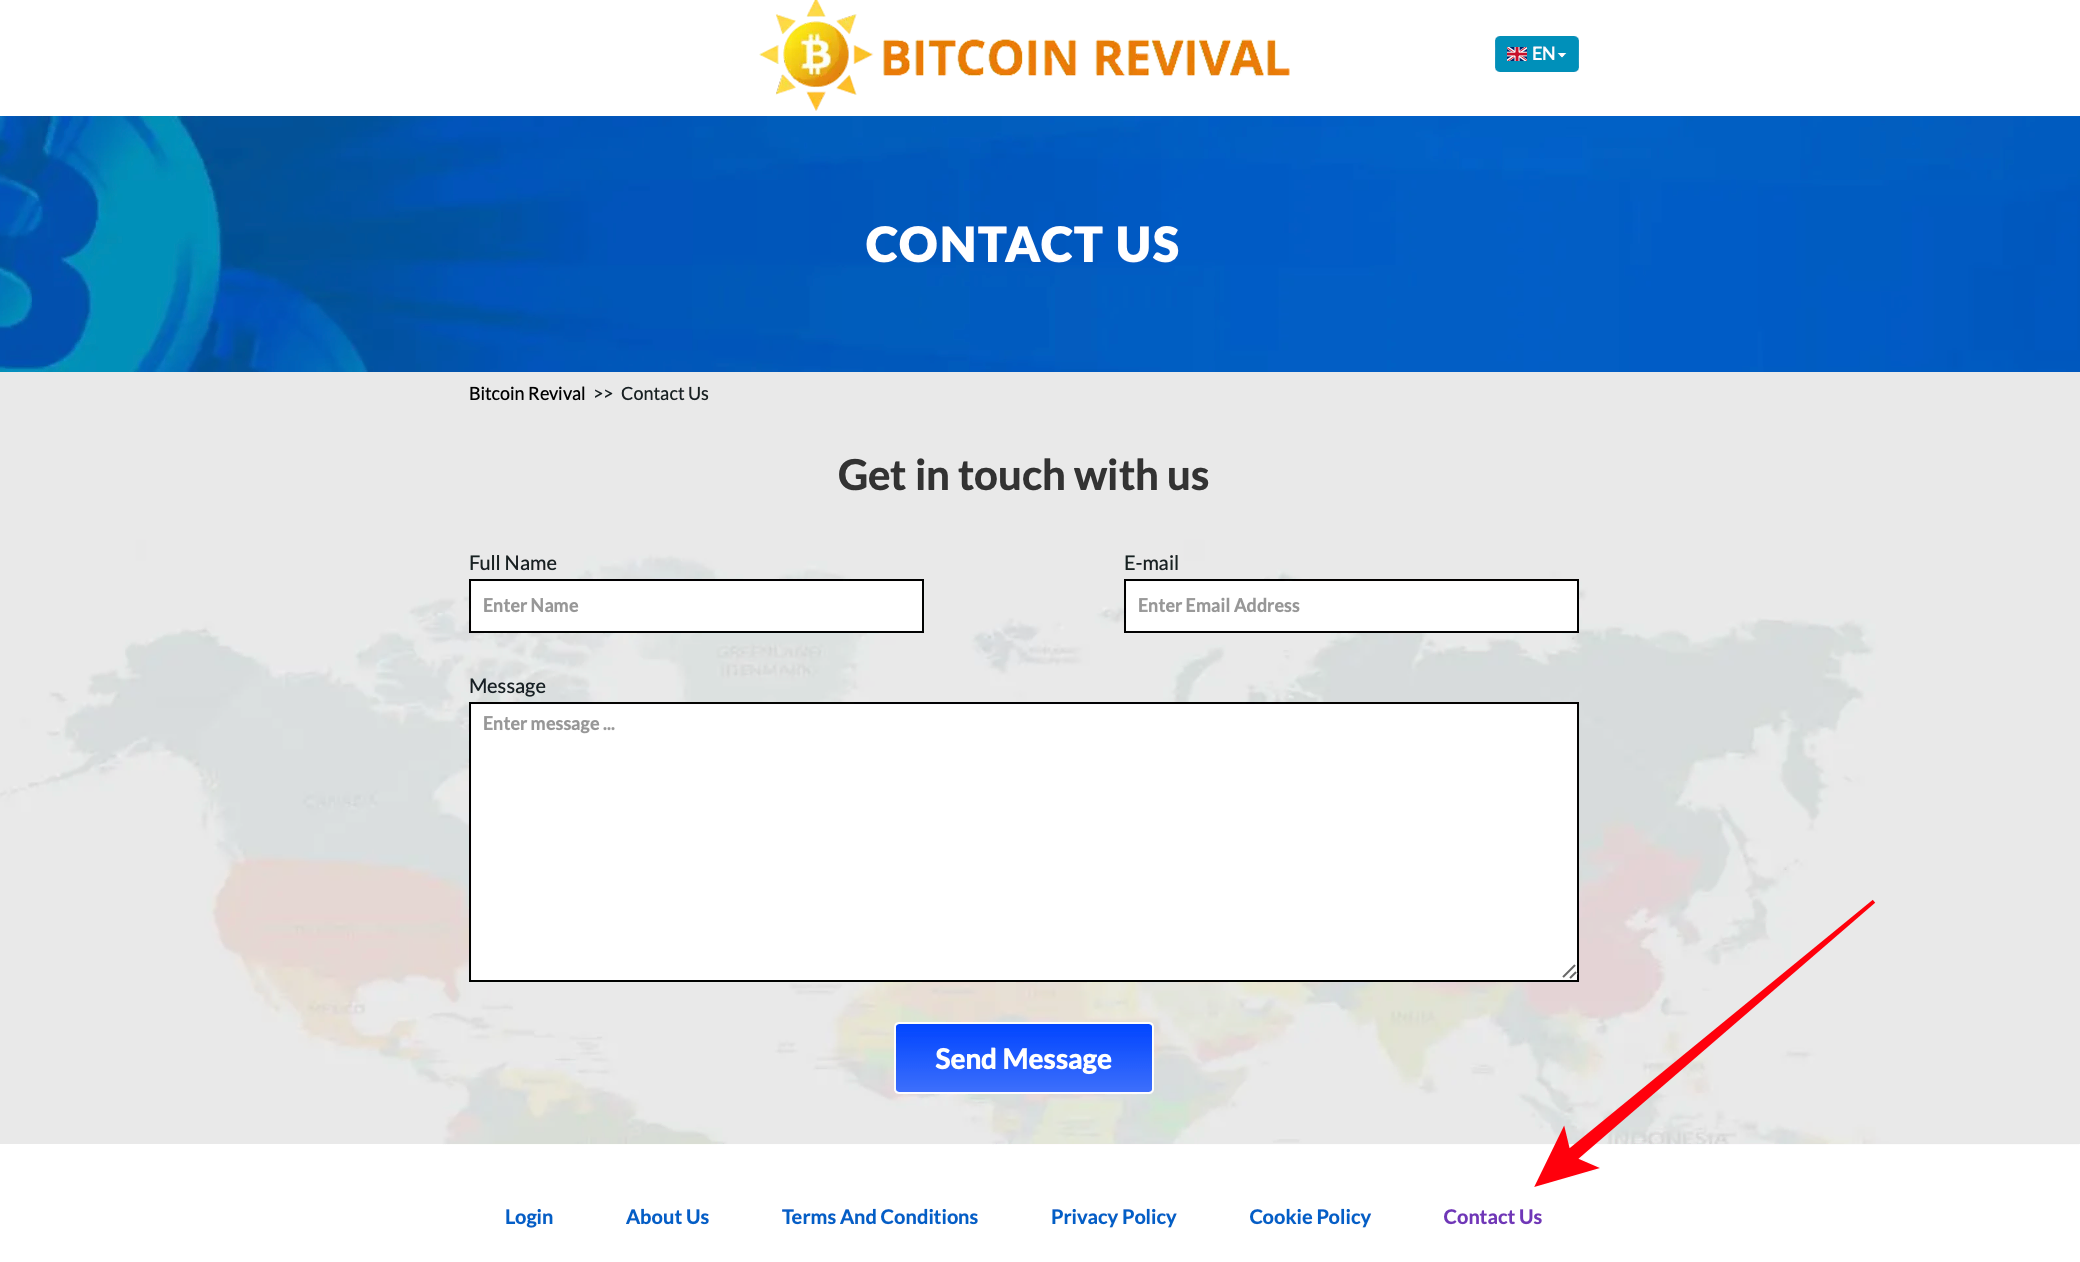 The customer service of Bitcoin Revival